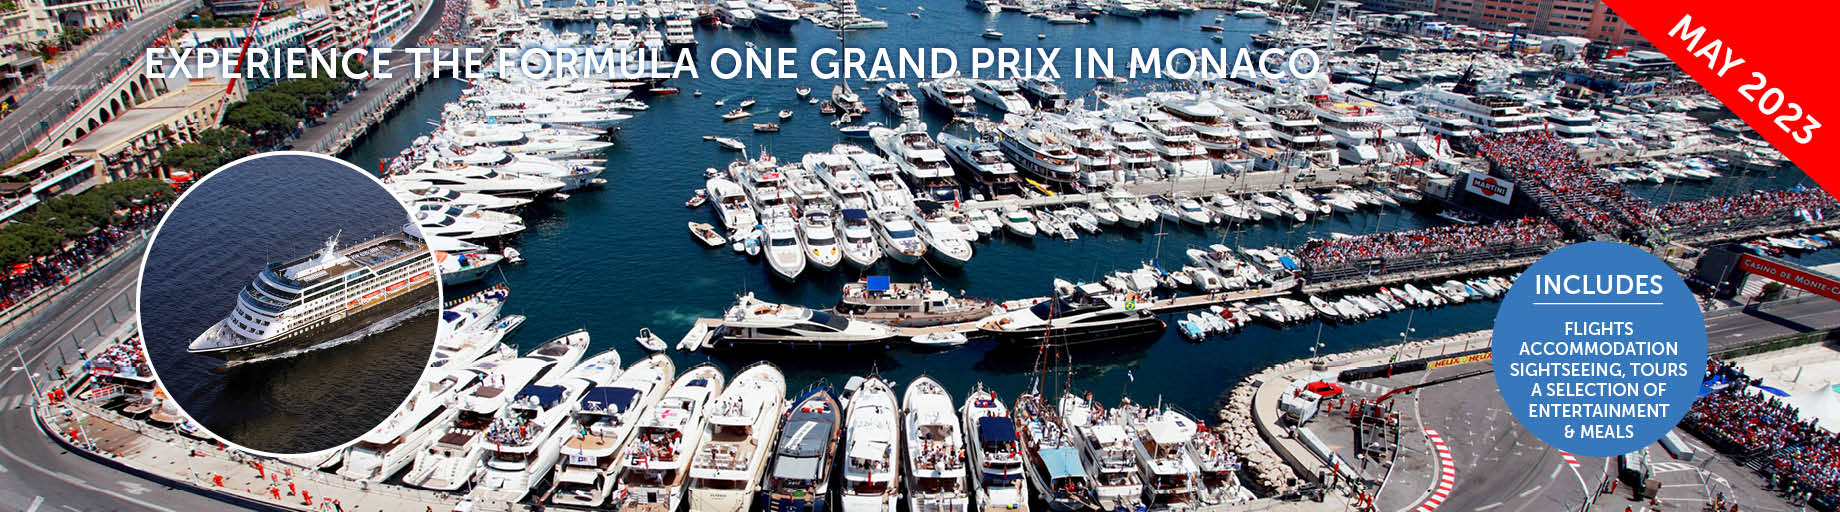 Monaco Grand Prix Mediterranean Cruise